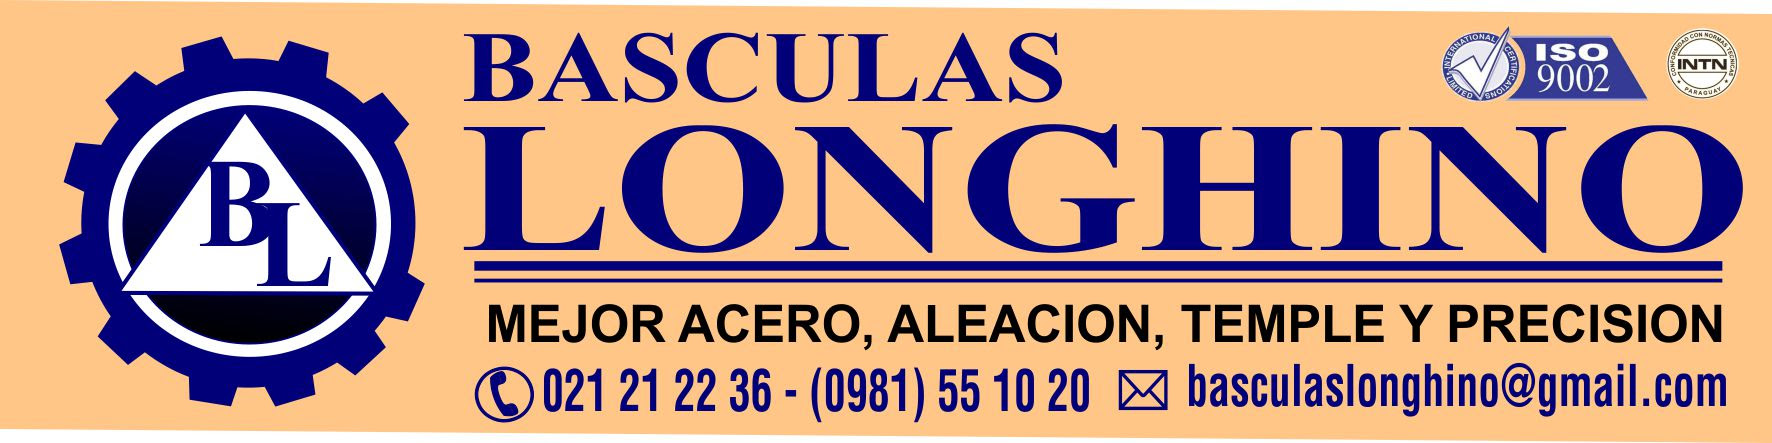 Basculas Longhino